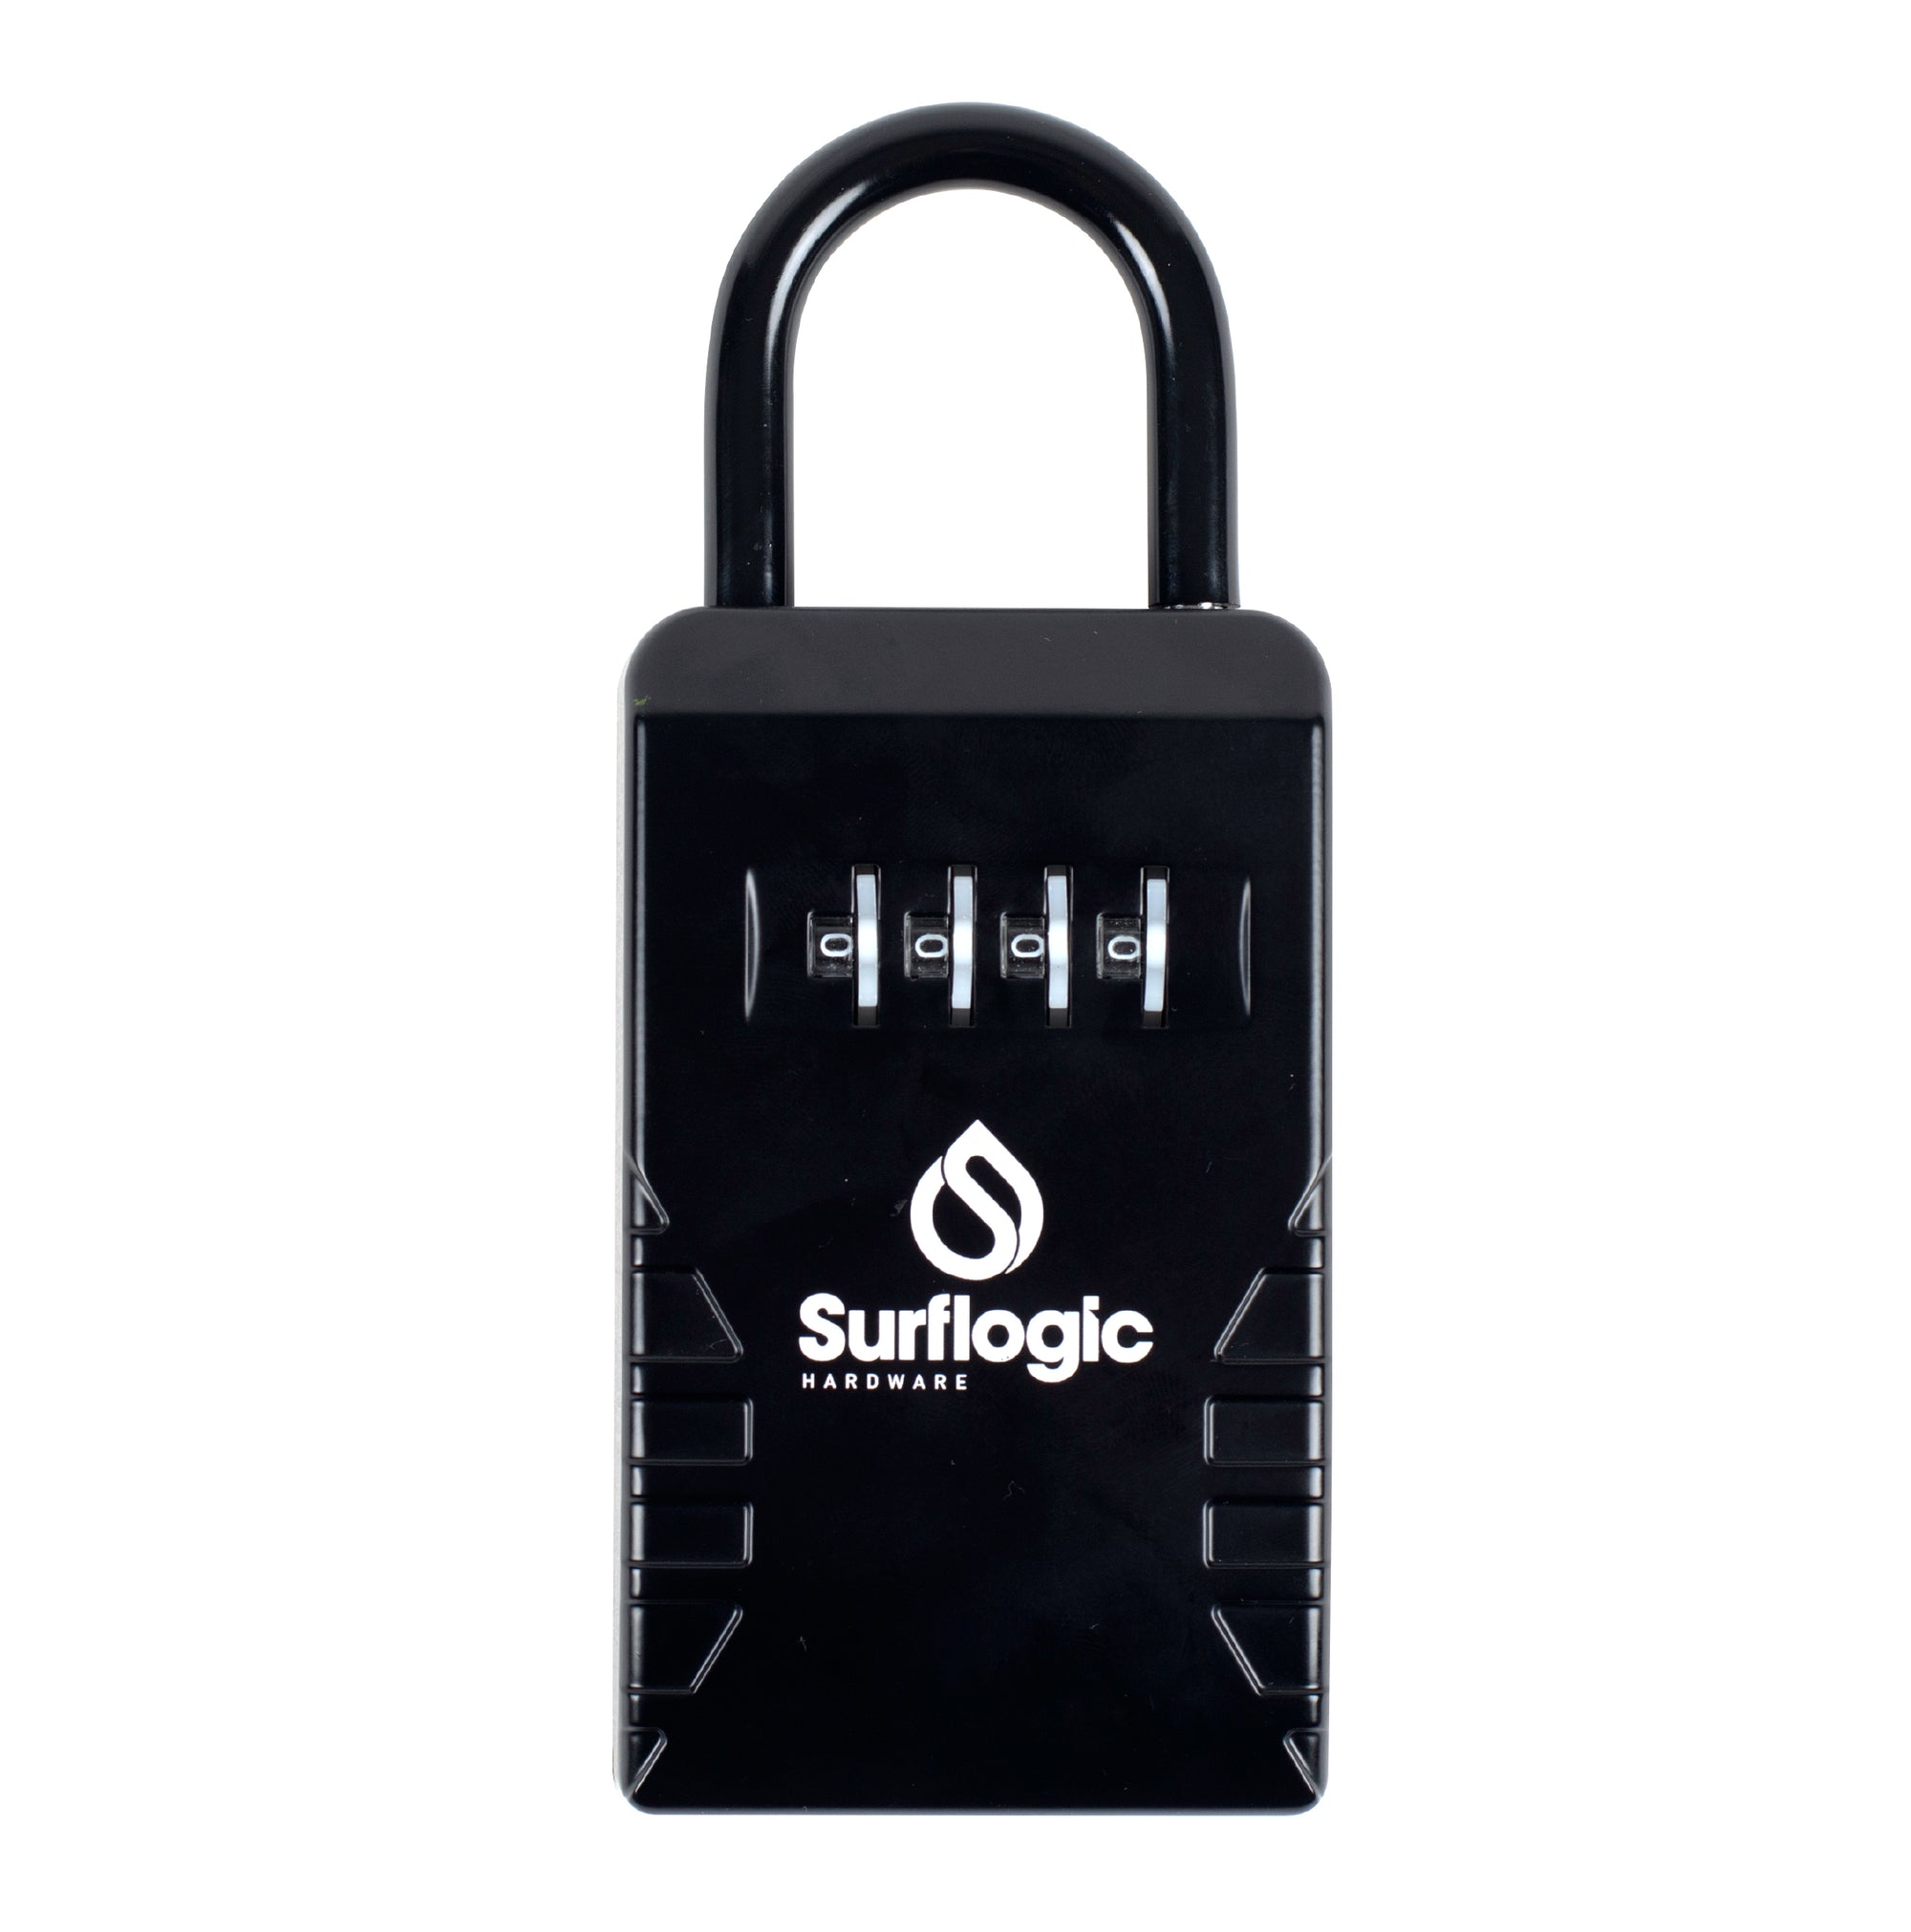 Surflogic Key Lock Pro